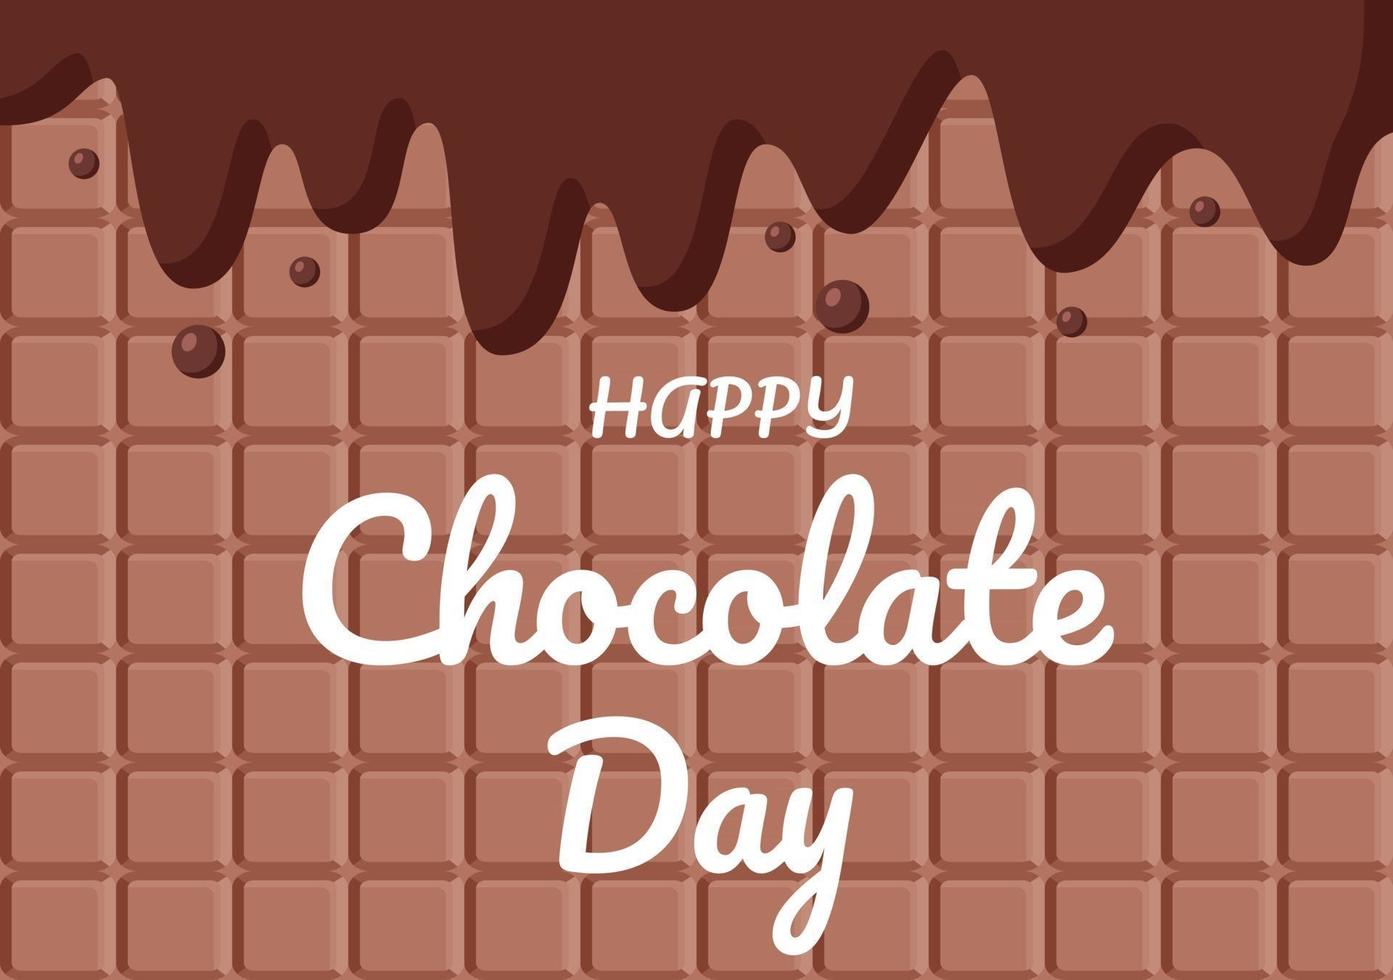 Happy Chocolate Day Feier Vektor-Illustration celebration vektor